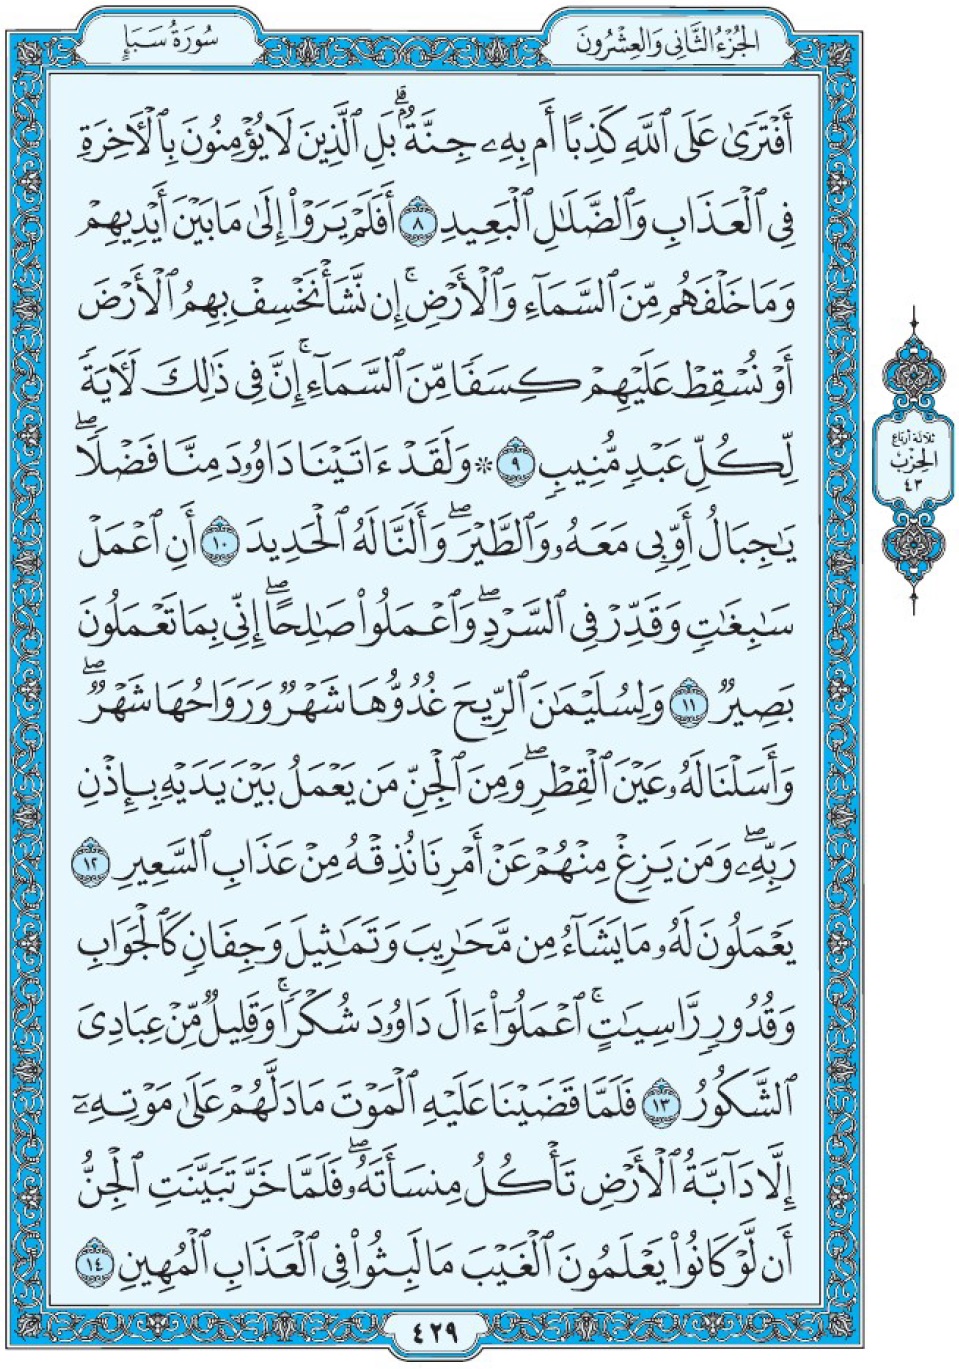 Коран Мединский мусхаф страница 429, Саба, аят 8-14